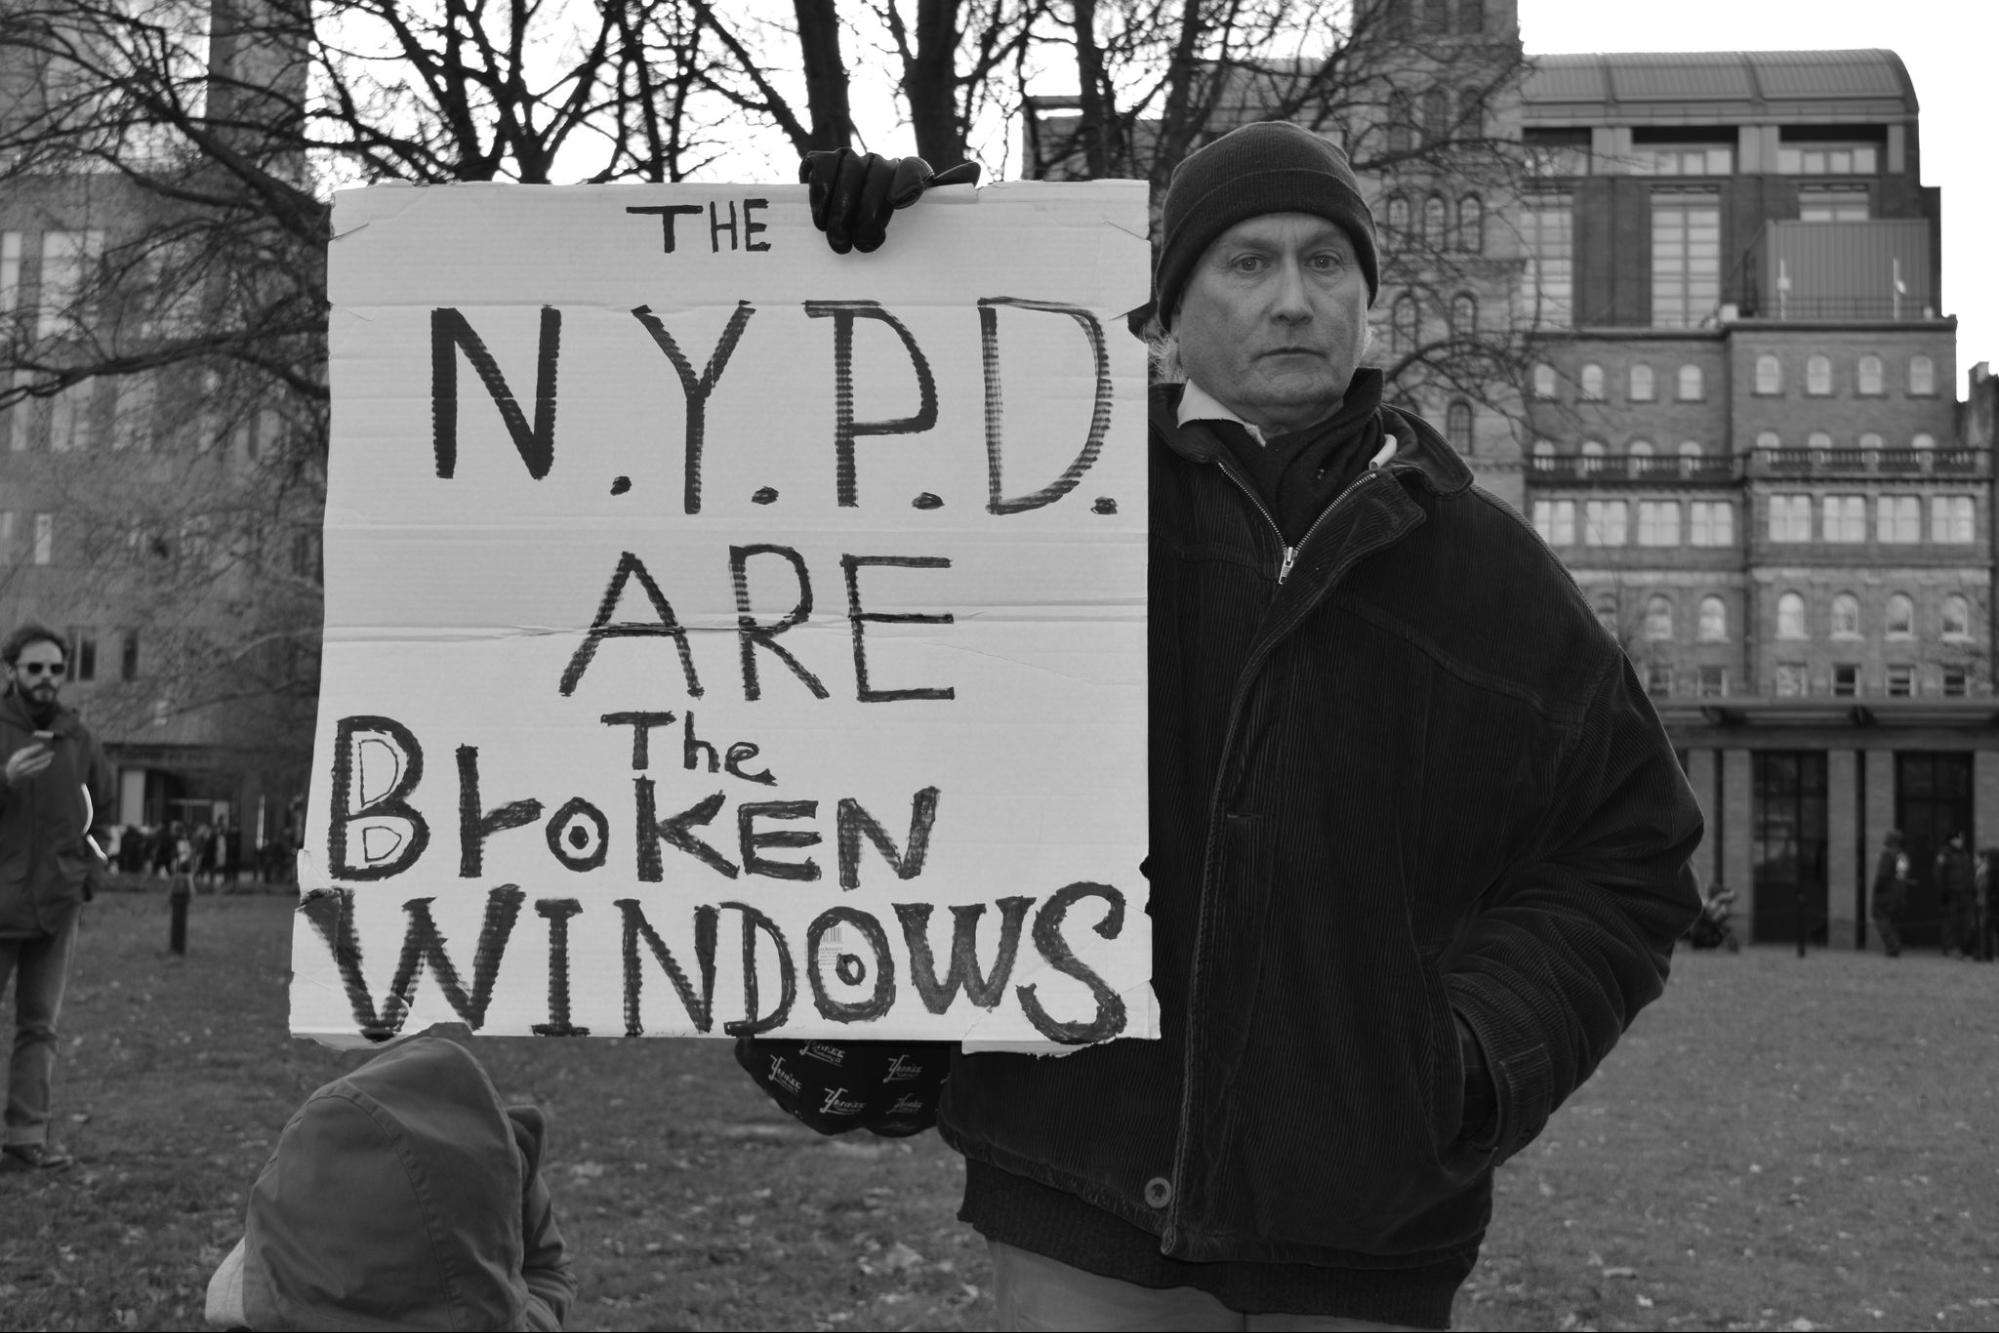 NYPD, Broken Windows